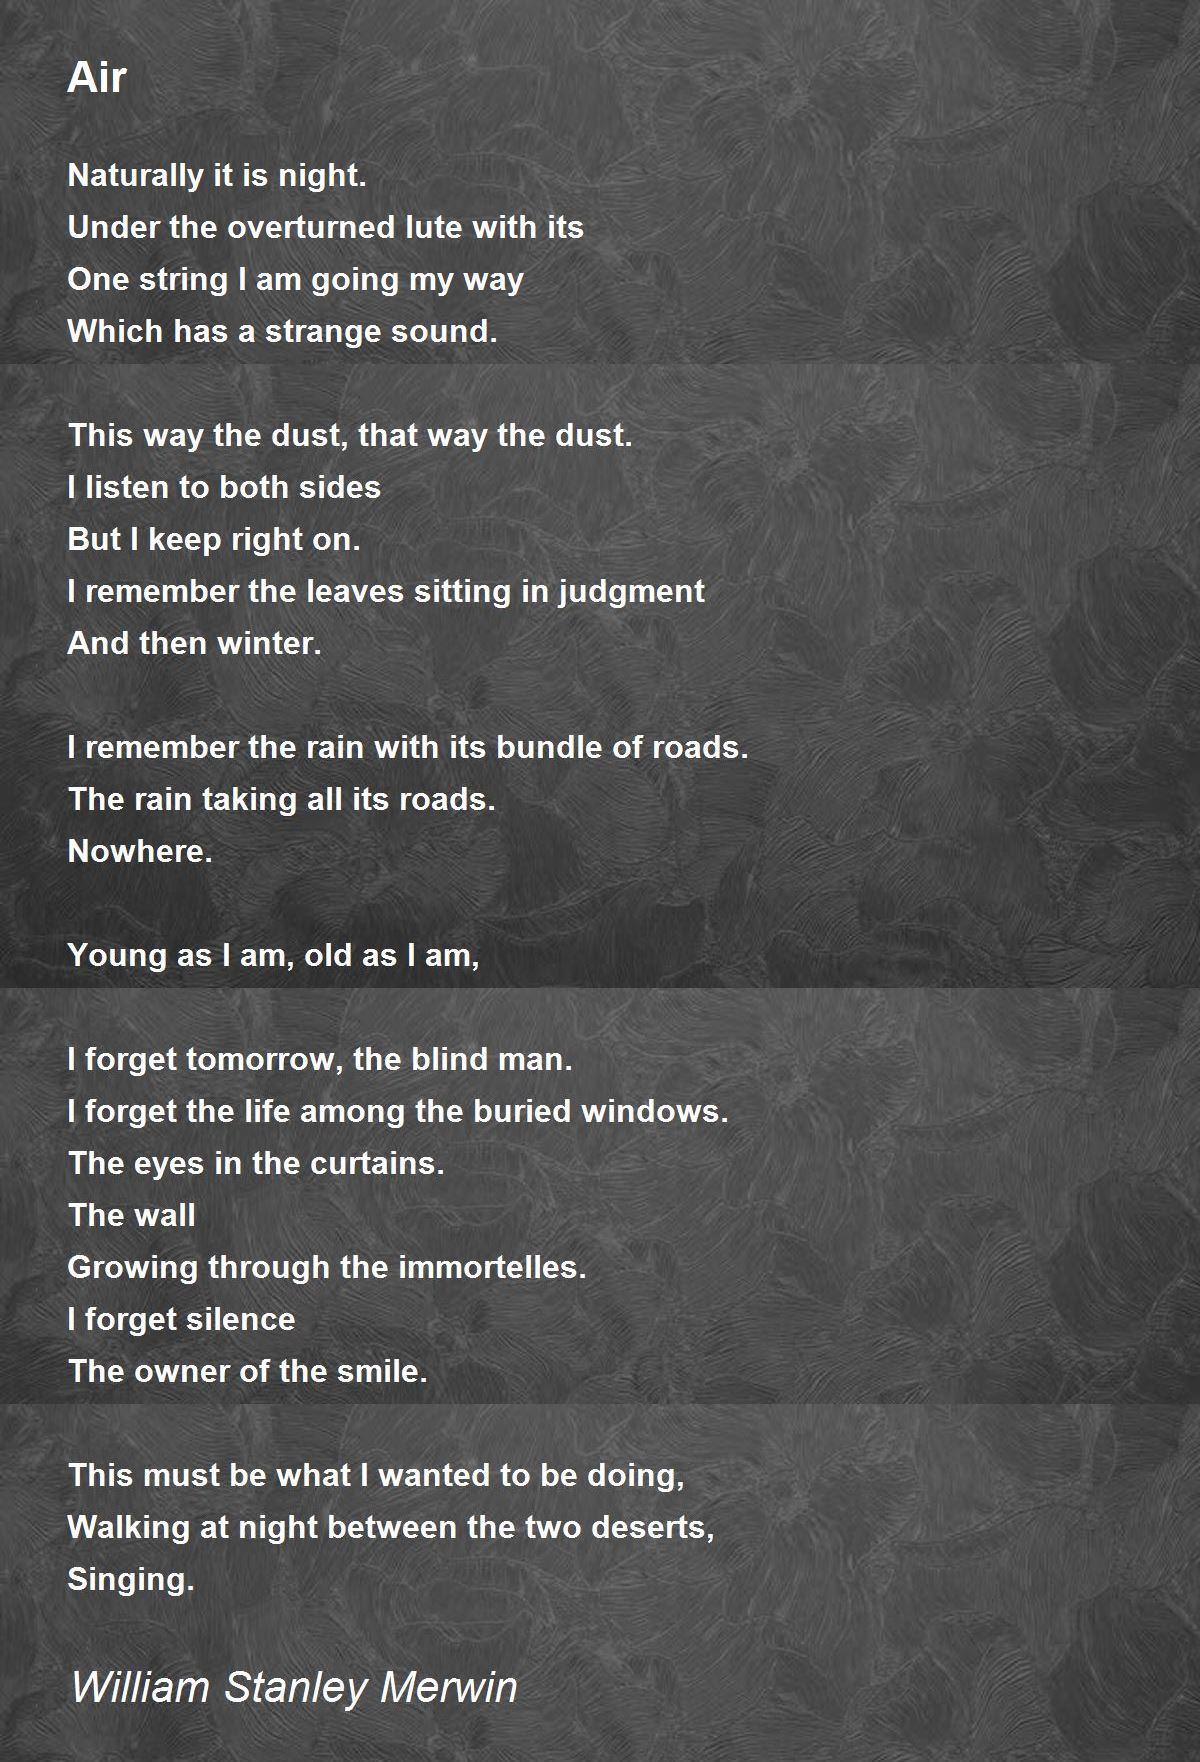 Air Poem by William Stanley Merwin - Poem Hunter